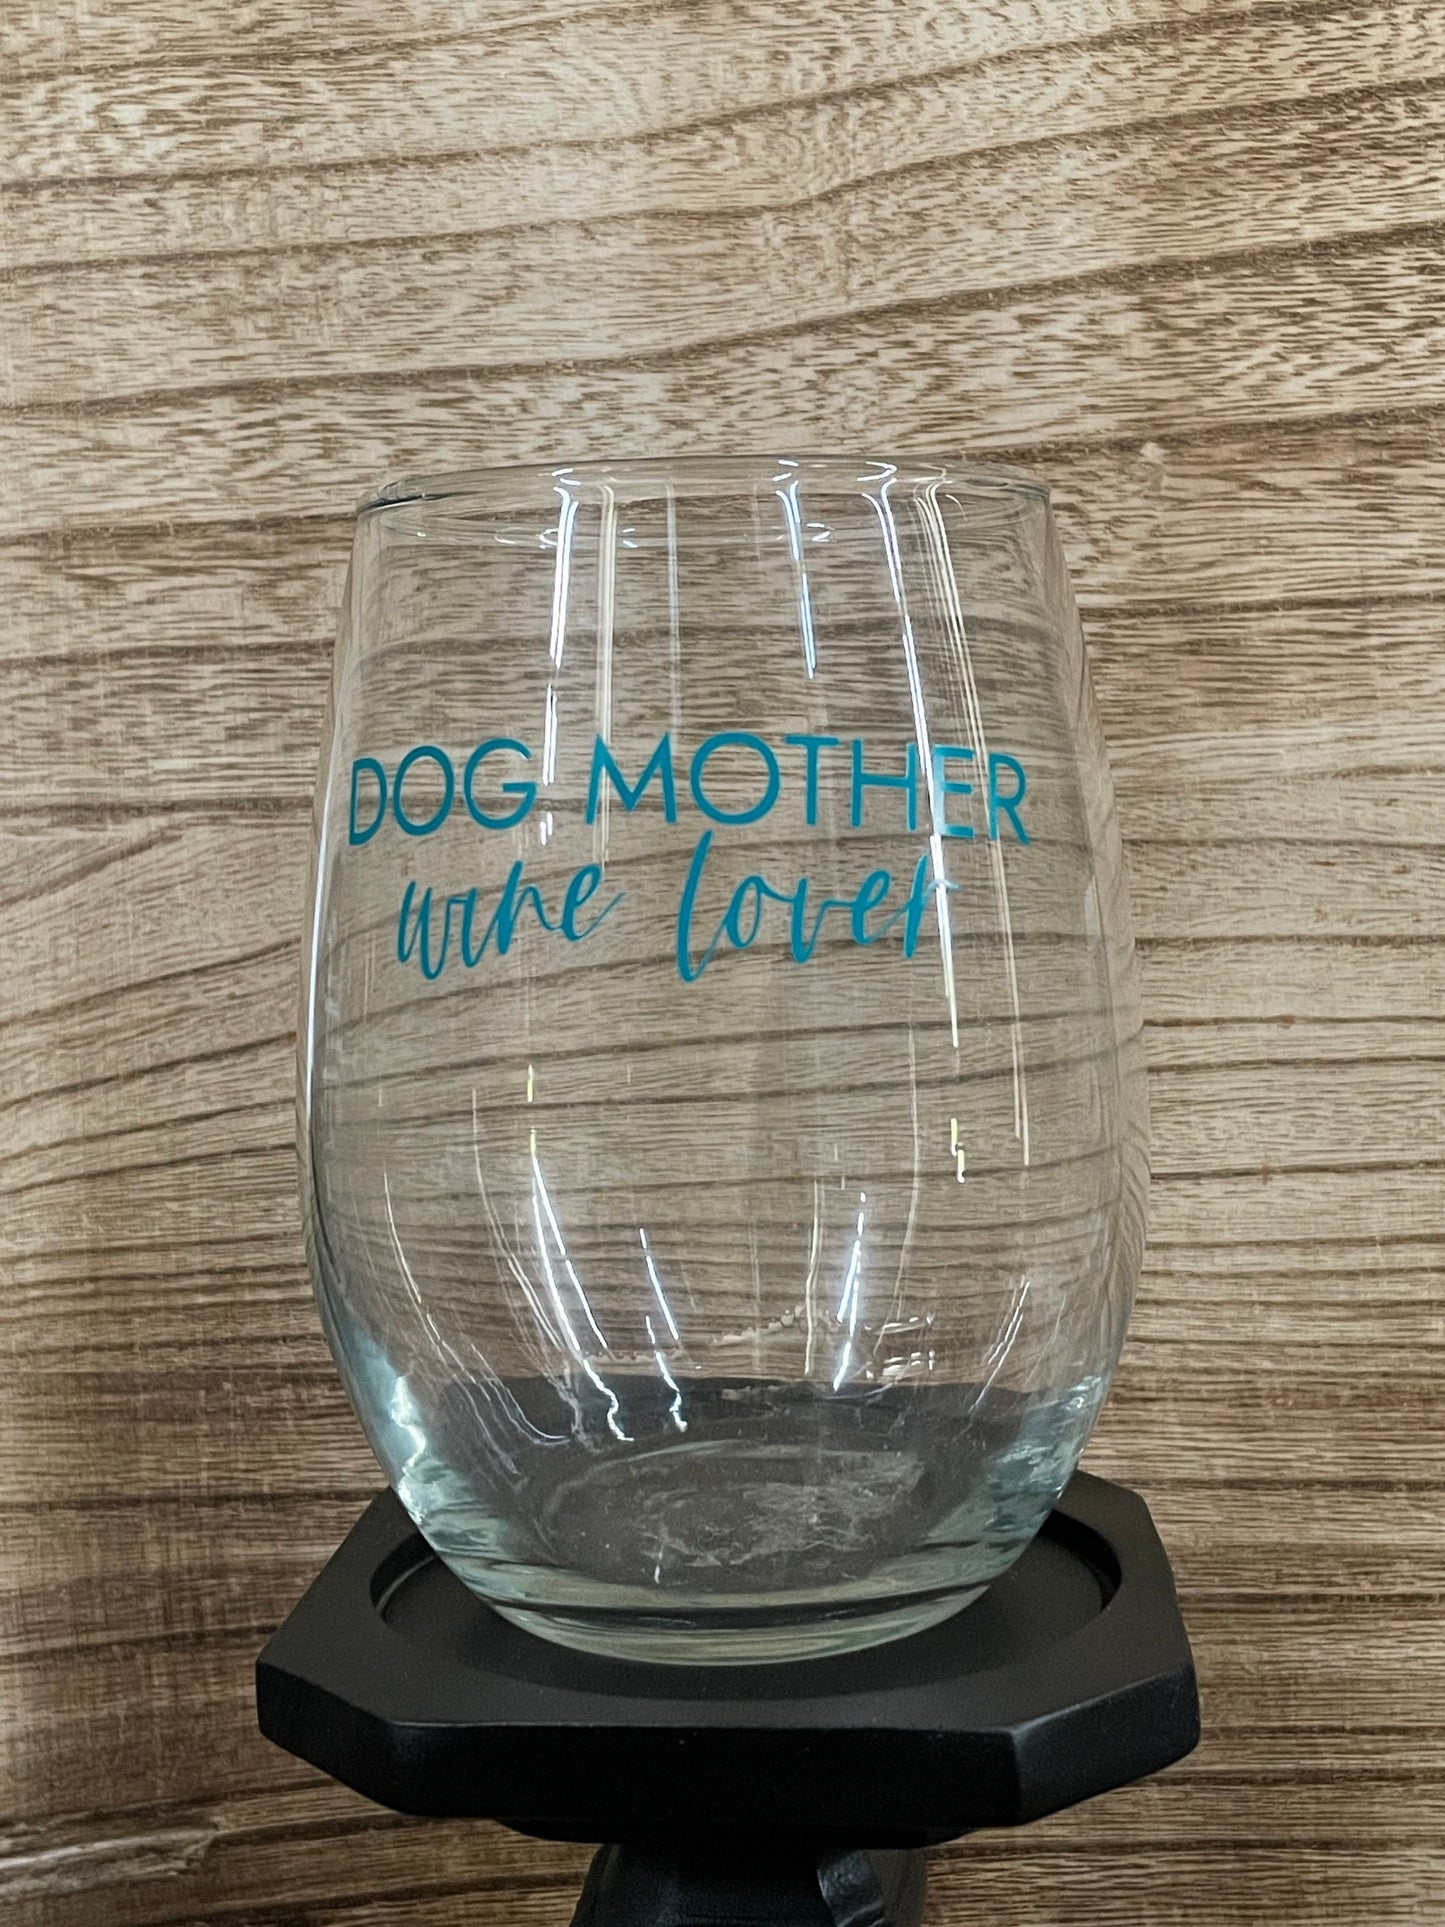 DOG Mother Wine Lover Wine Glass